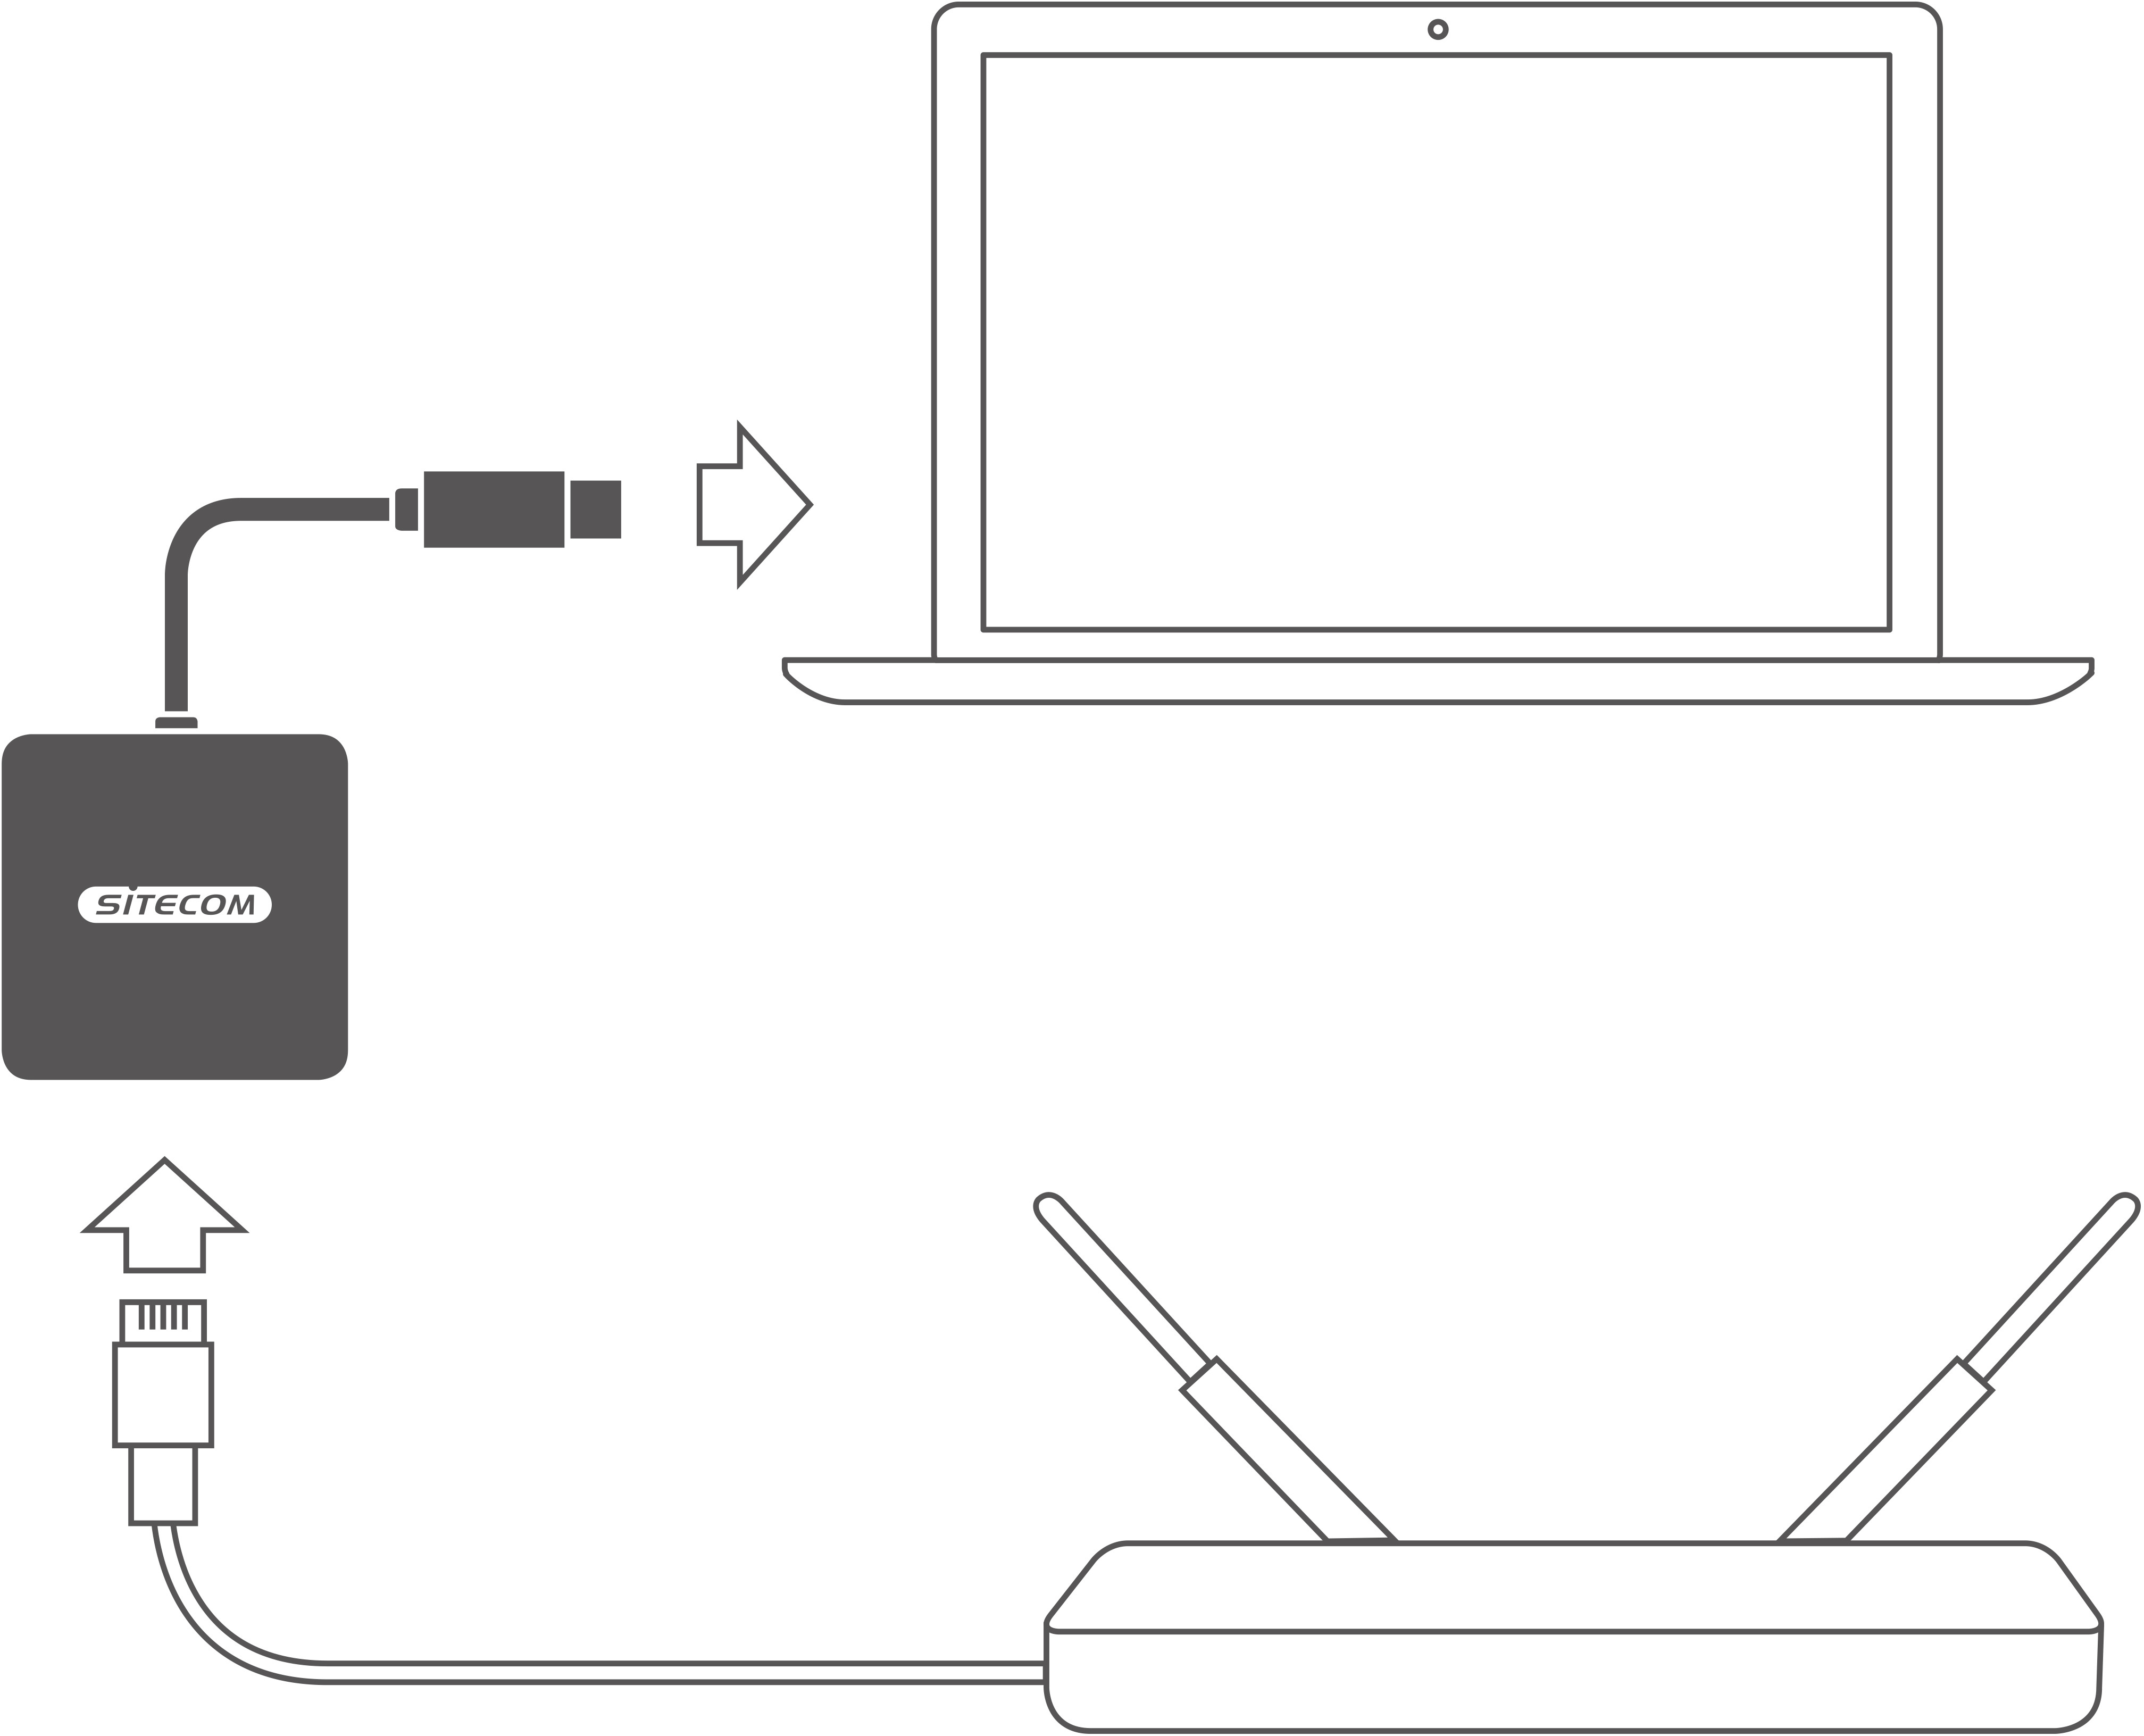 SITECOM USB 3.0 to GB LAN Adapter CN-341